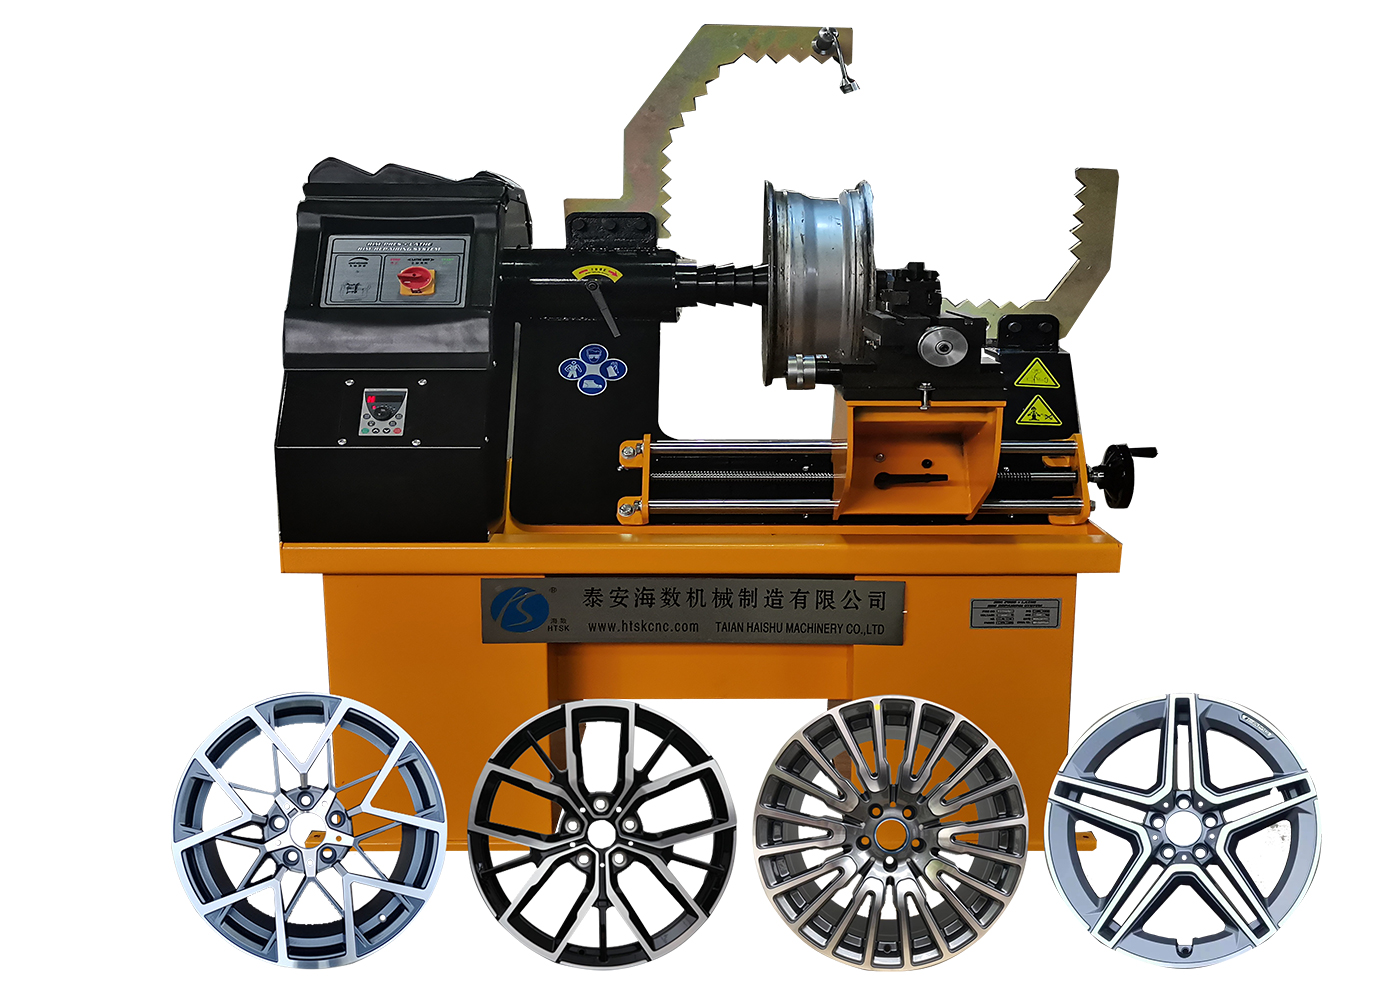 Revolutionize Wheel Repair with the RSM595 Wheel Straightening Machine